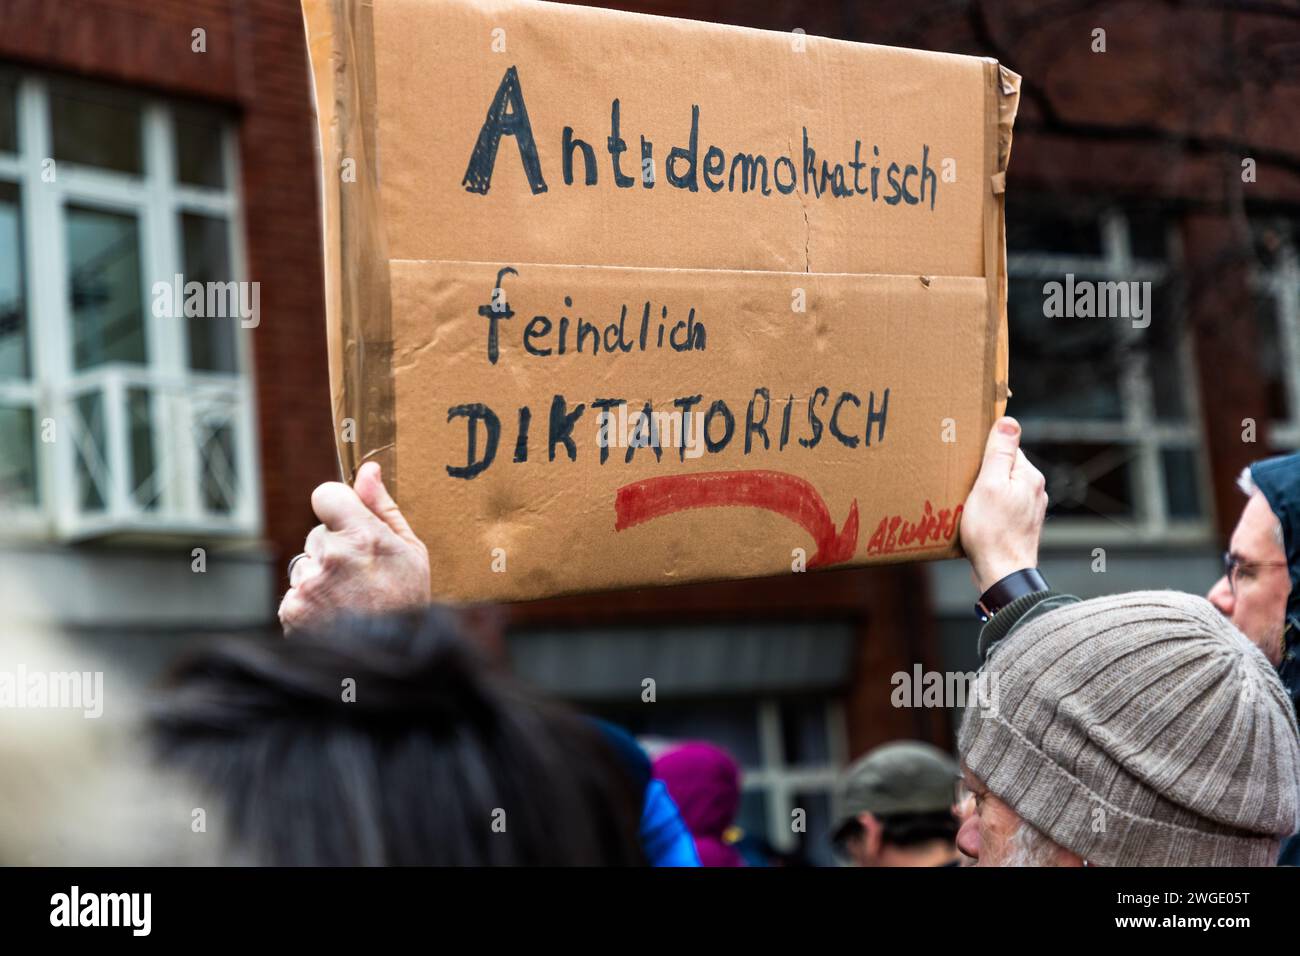 AFD bedeutet: Antidemokratisch feindselig diktatorisch. Demonstration gegen Rechtsextremismus am 4.2.2024 in Grevenbroich Stockfoto